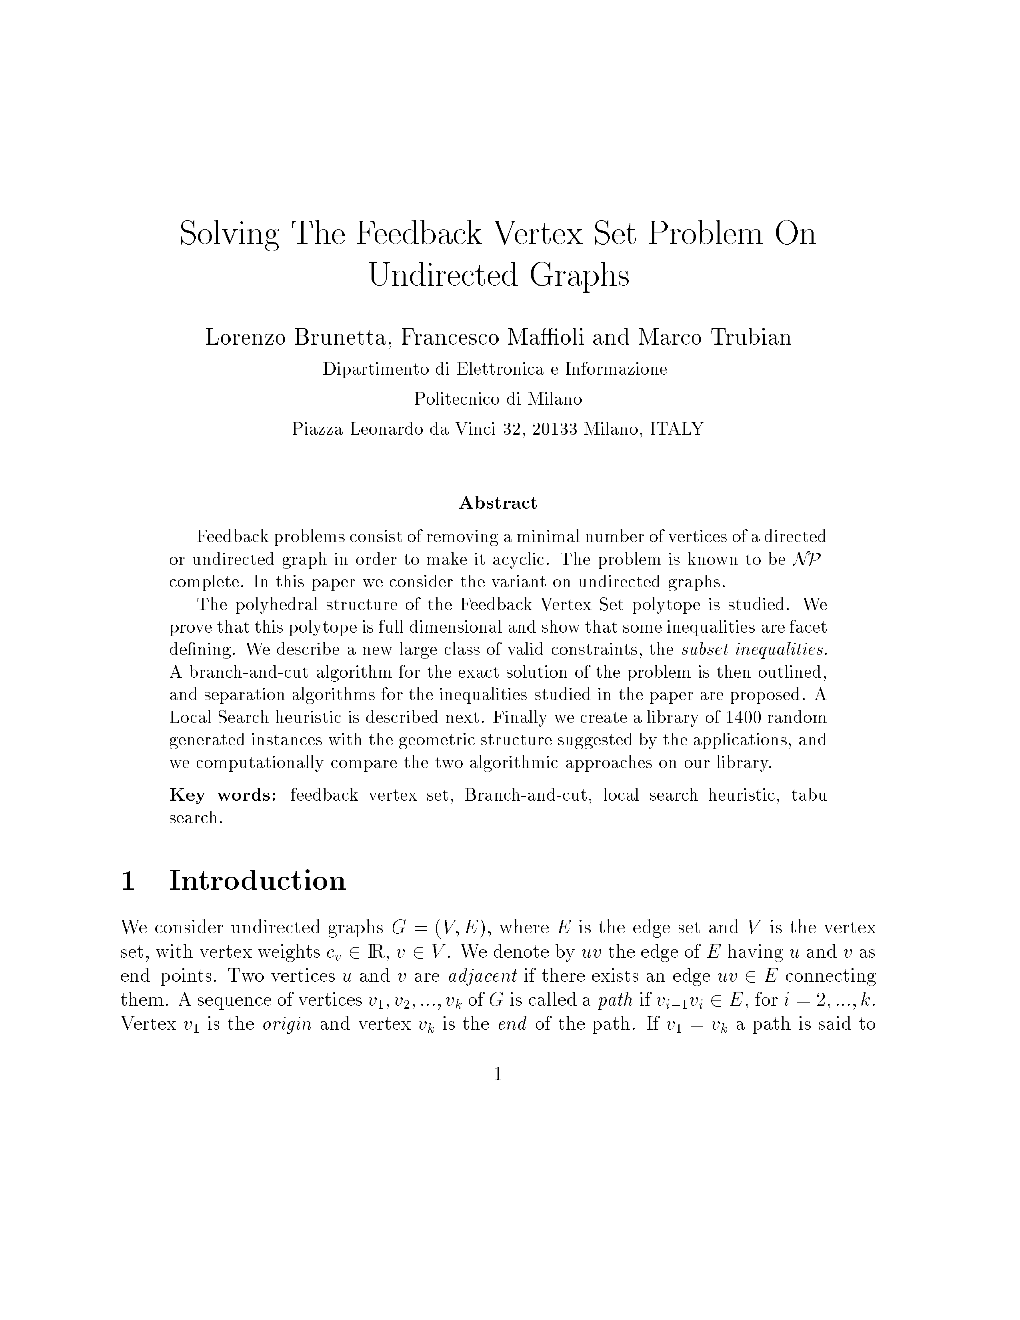 Solving the Feedback Vertex Set Problem on Undirected Graphs